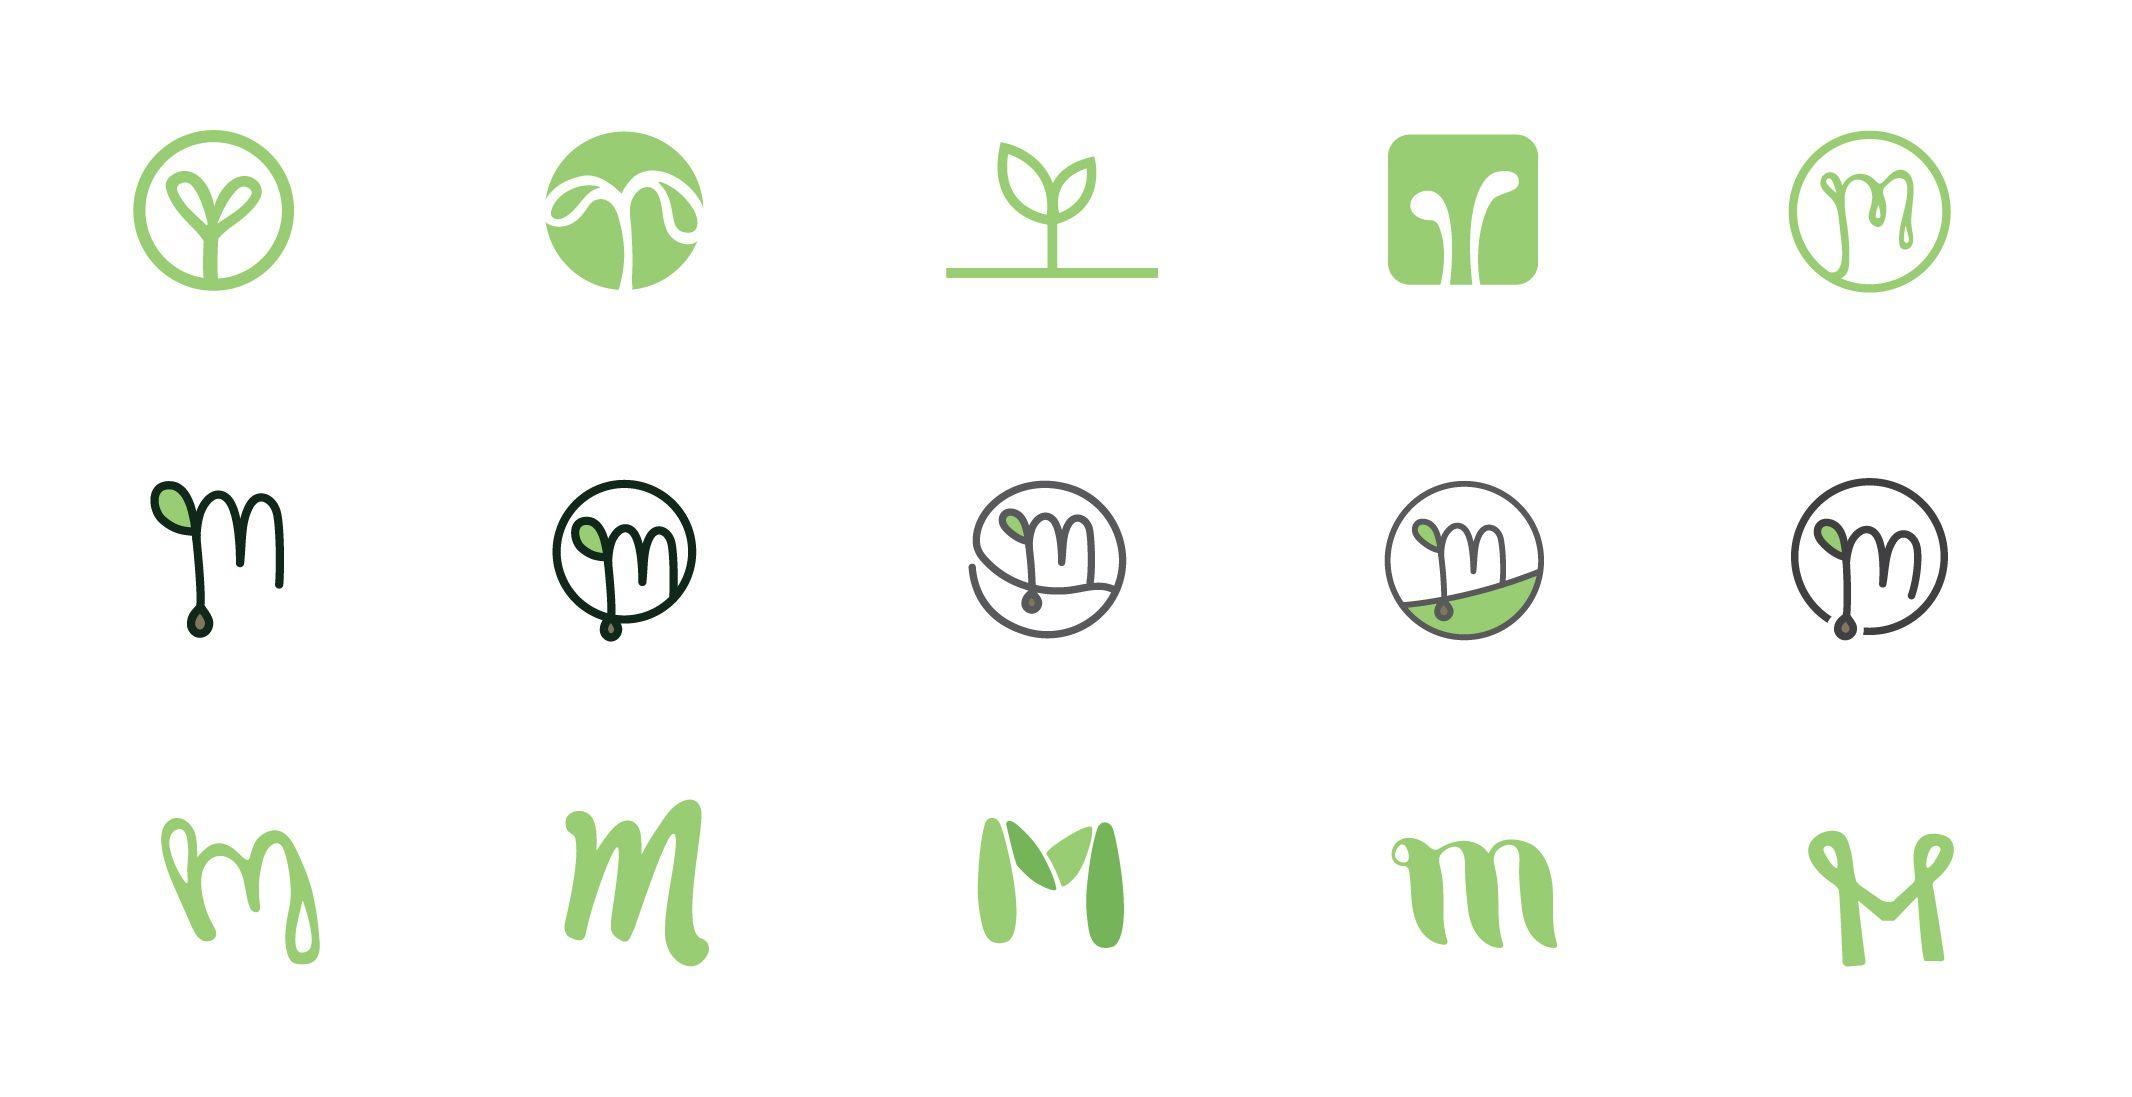 Microgreens Logo - Logo Process #logo #logodesign #greens #microgreens #modern #icon